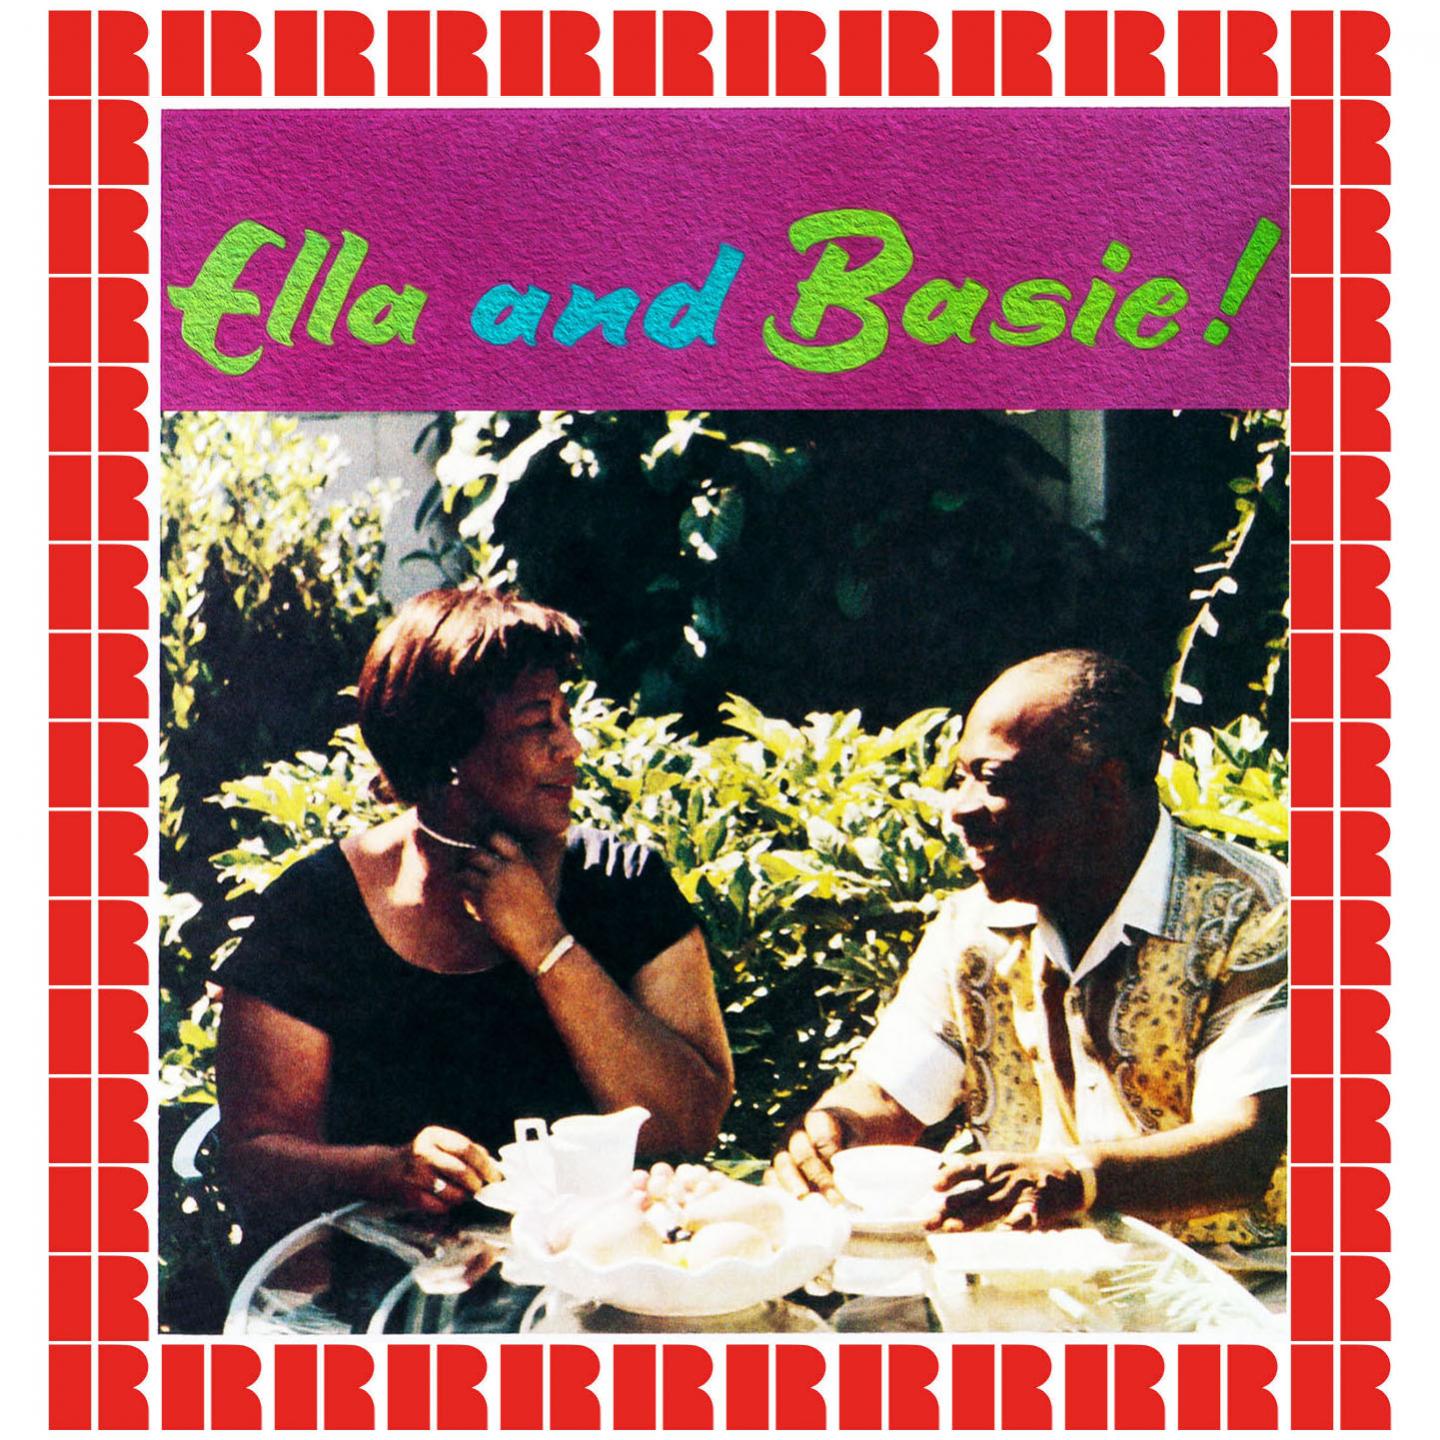 Ella And Basie! (Hd Remastered Edition)